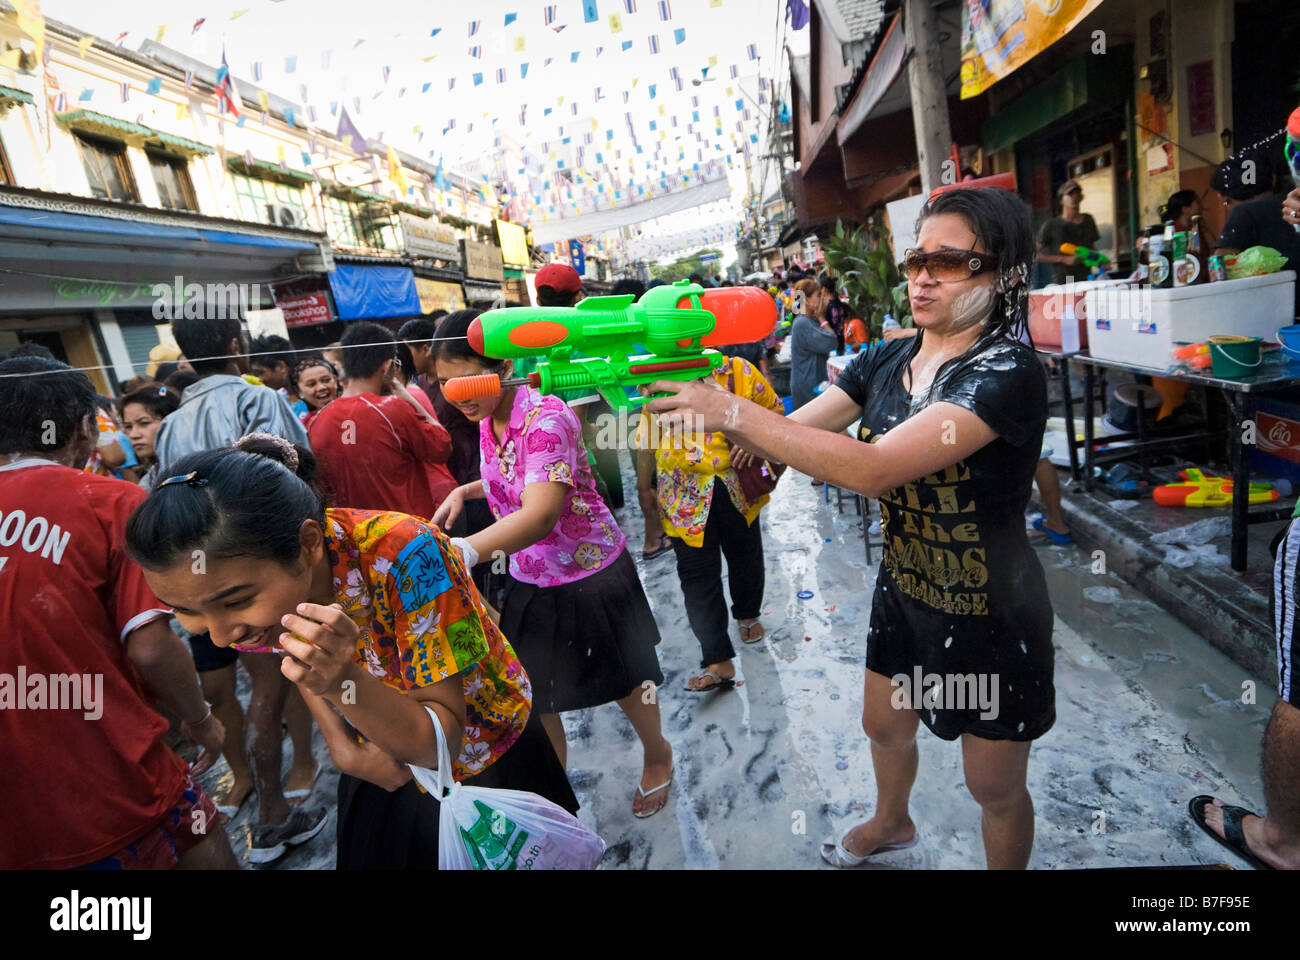 Young people celebrating the Thai new year of Songkran - Banglamphu Bangkok Thailand Stock Photo